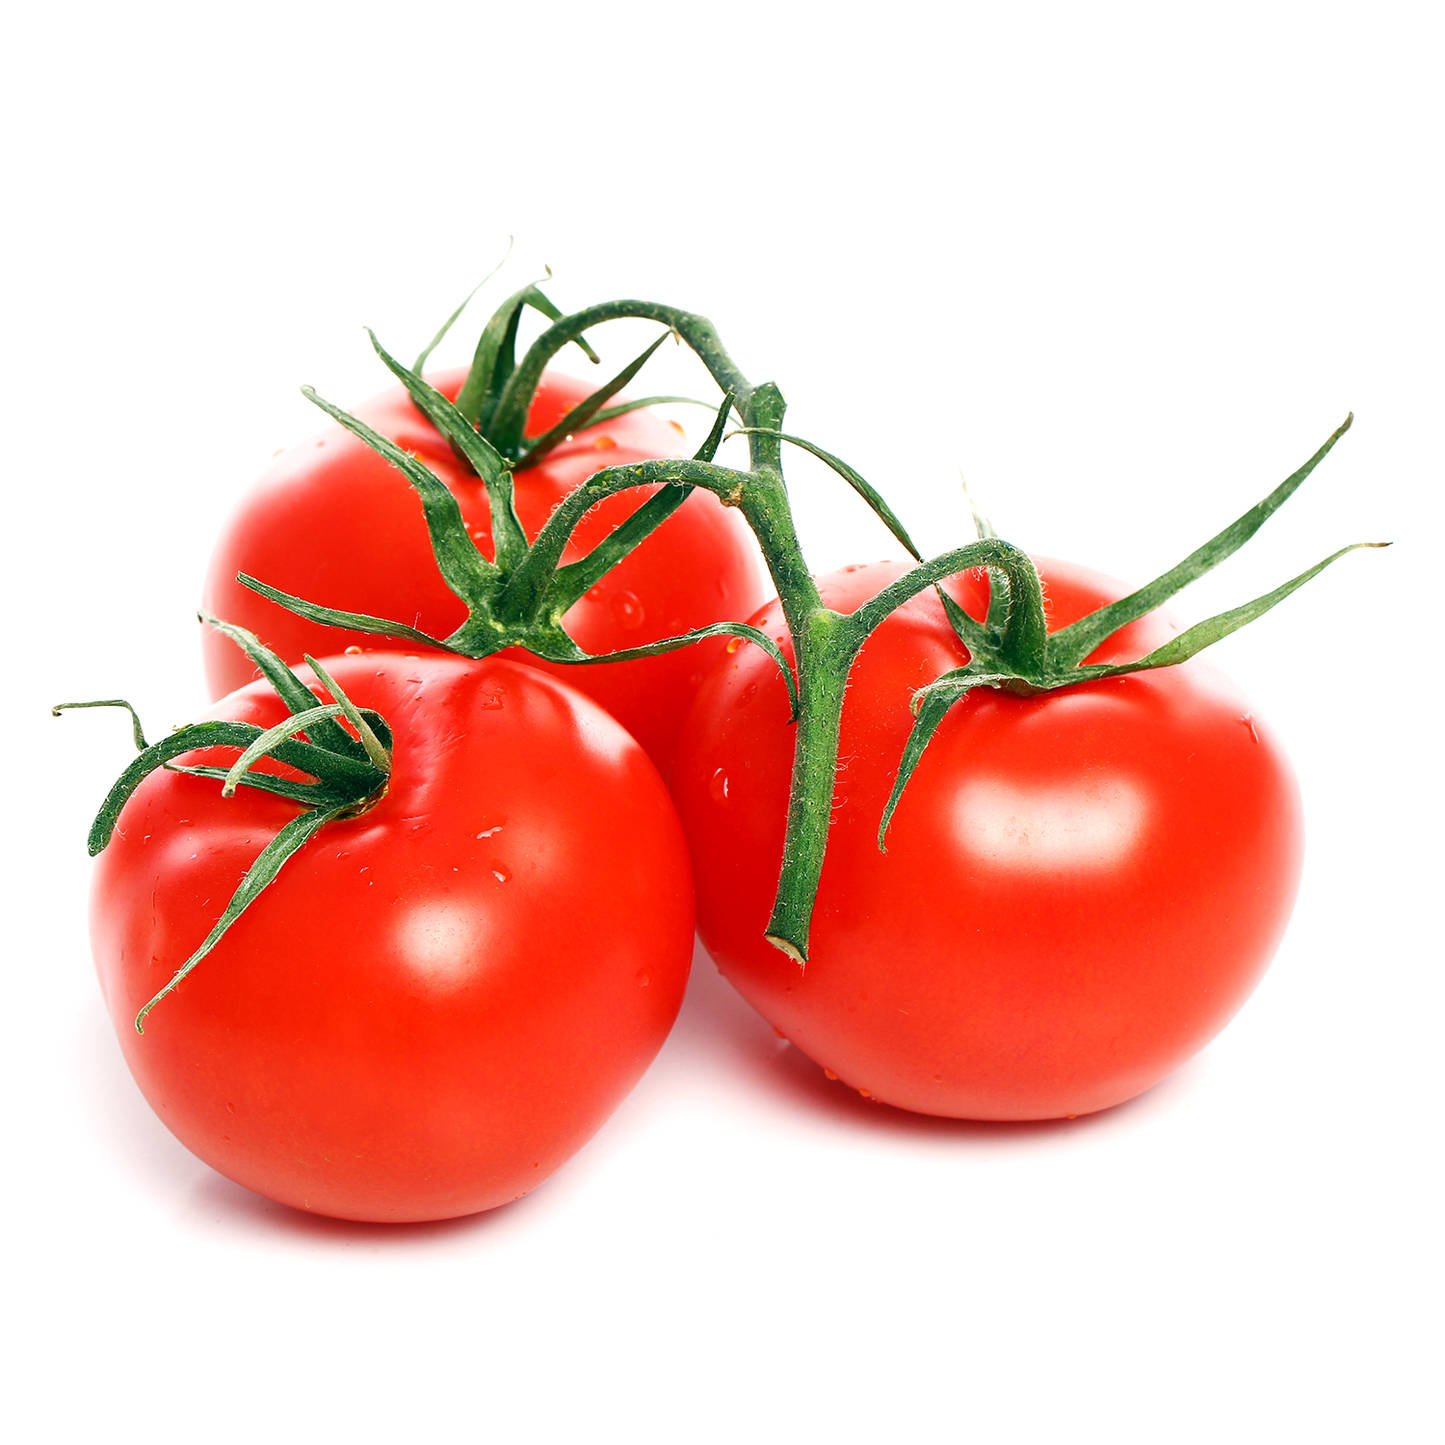 Organic Cherry Tomato / 1 pint box